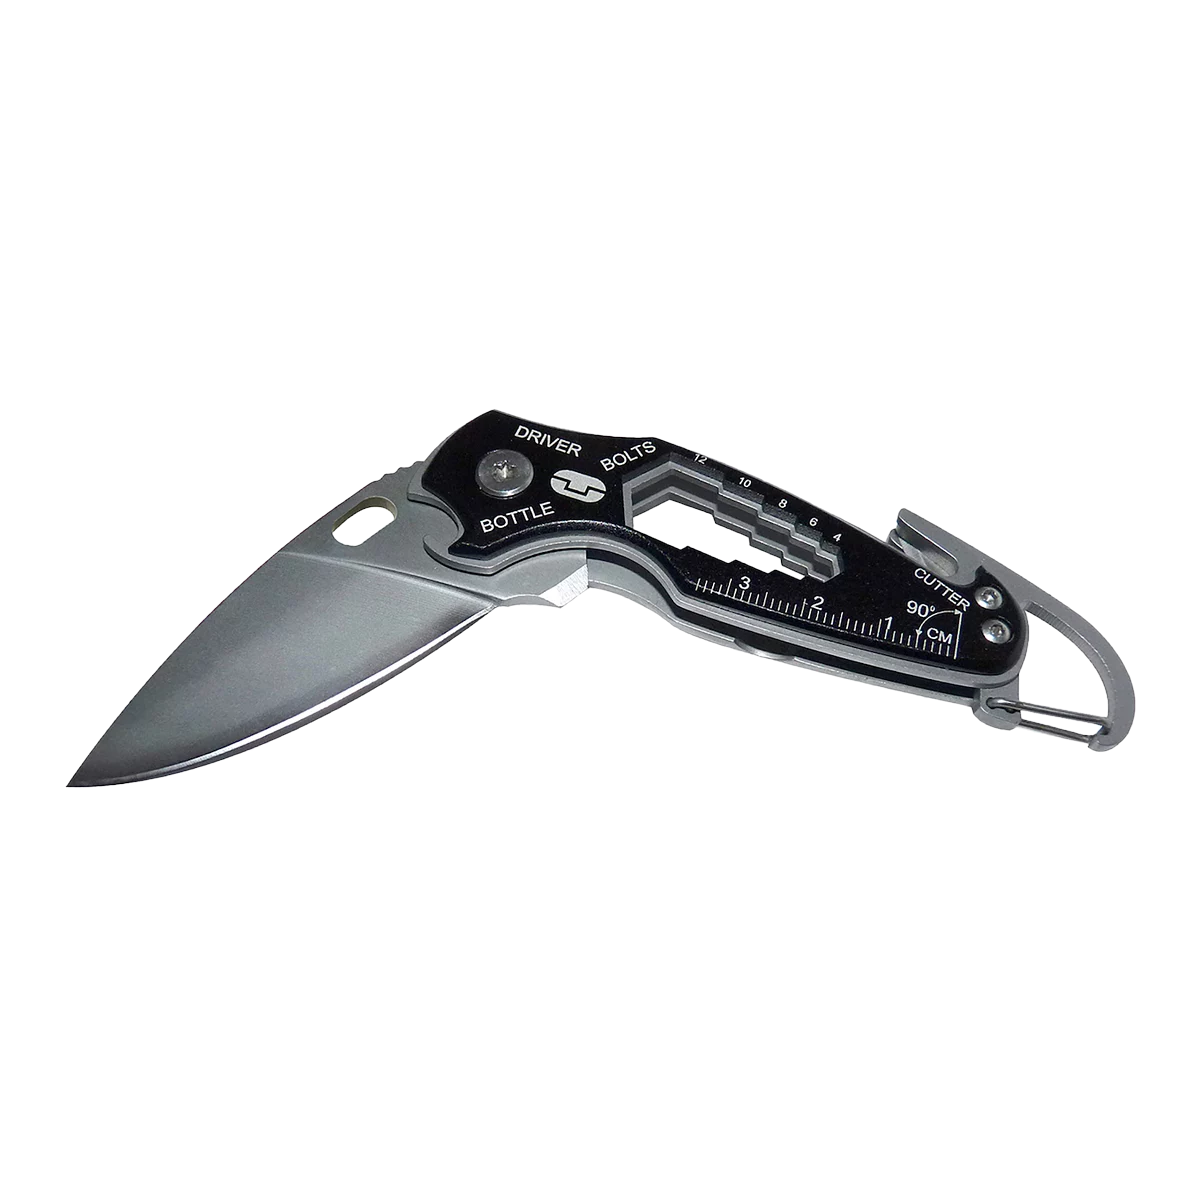 True Utility Smartknife Pocketknife with 7-in-1 Multi-Tool